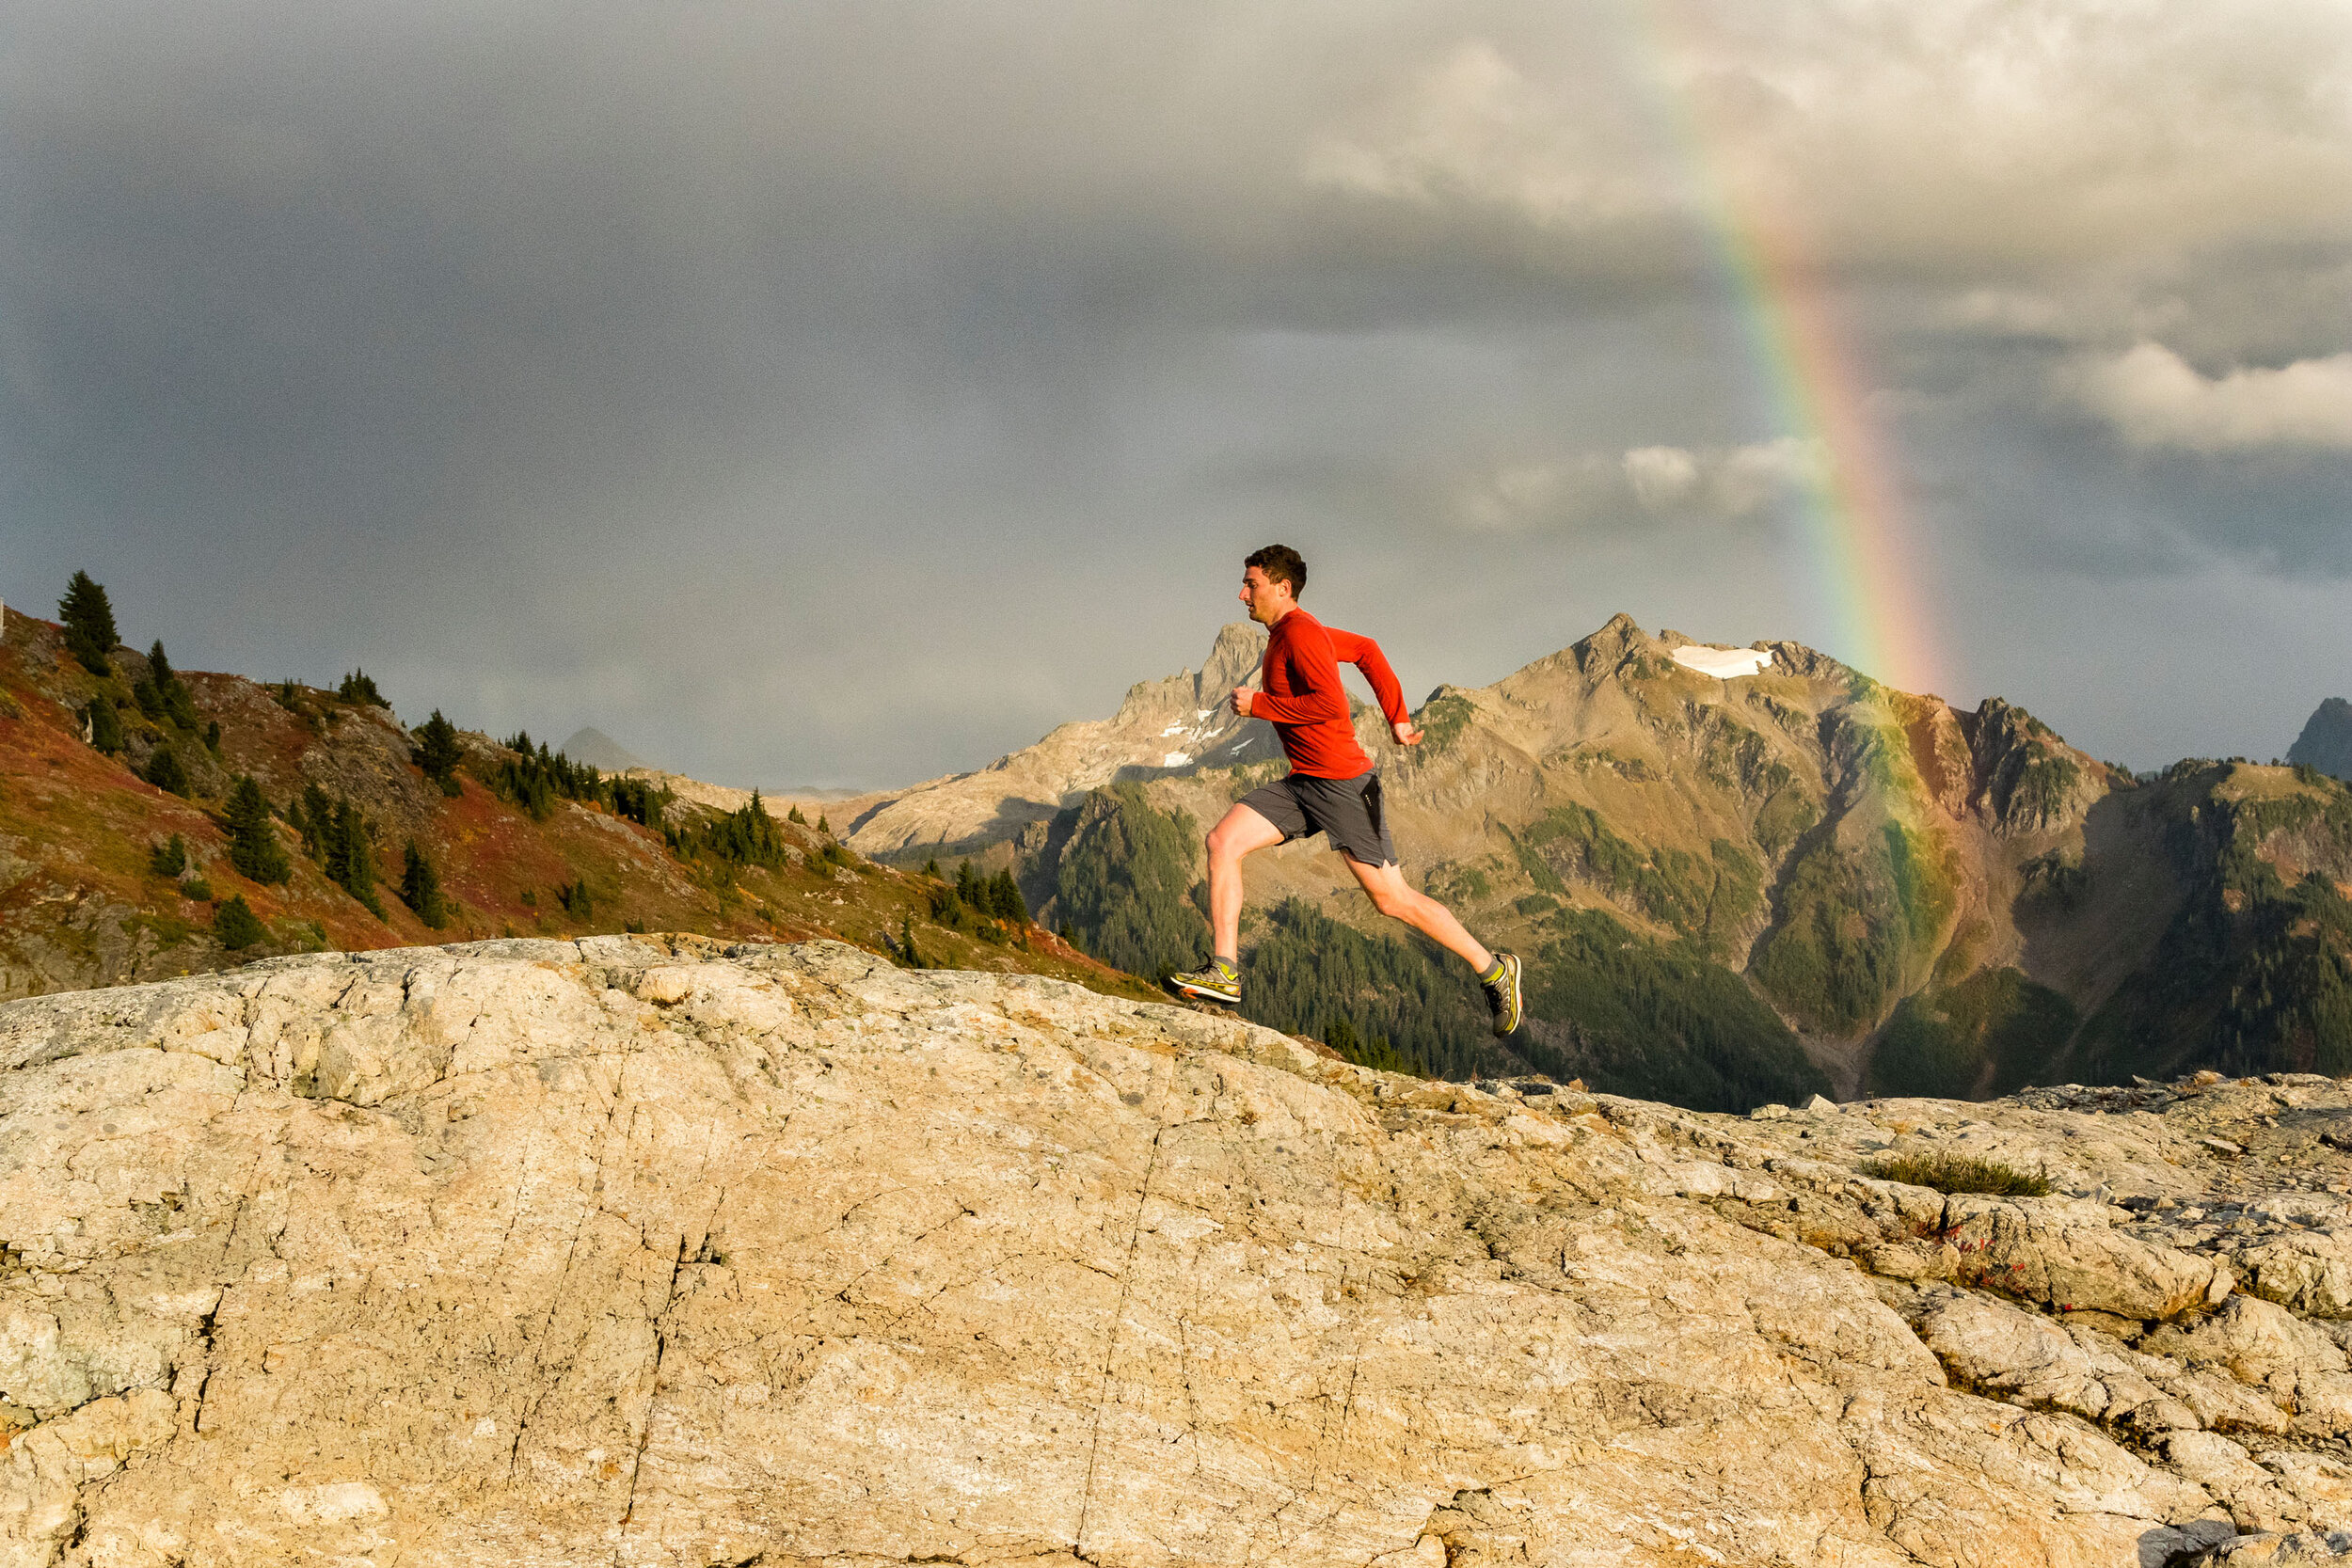  Adventure: Alex Aizenman trail running beneath a rainbow at Yellow Aster Butte in the North Cascades in autumn, Washington 